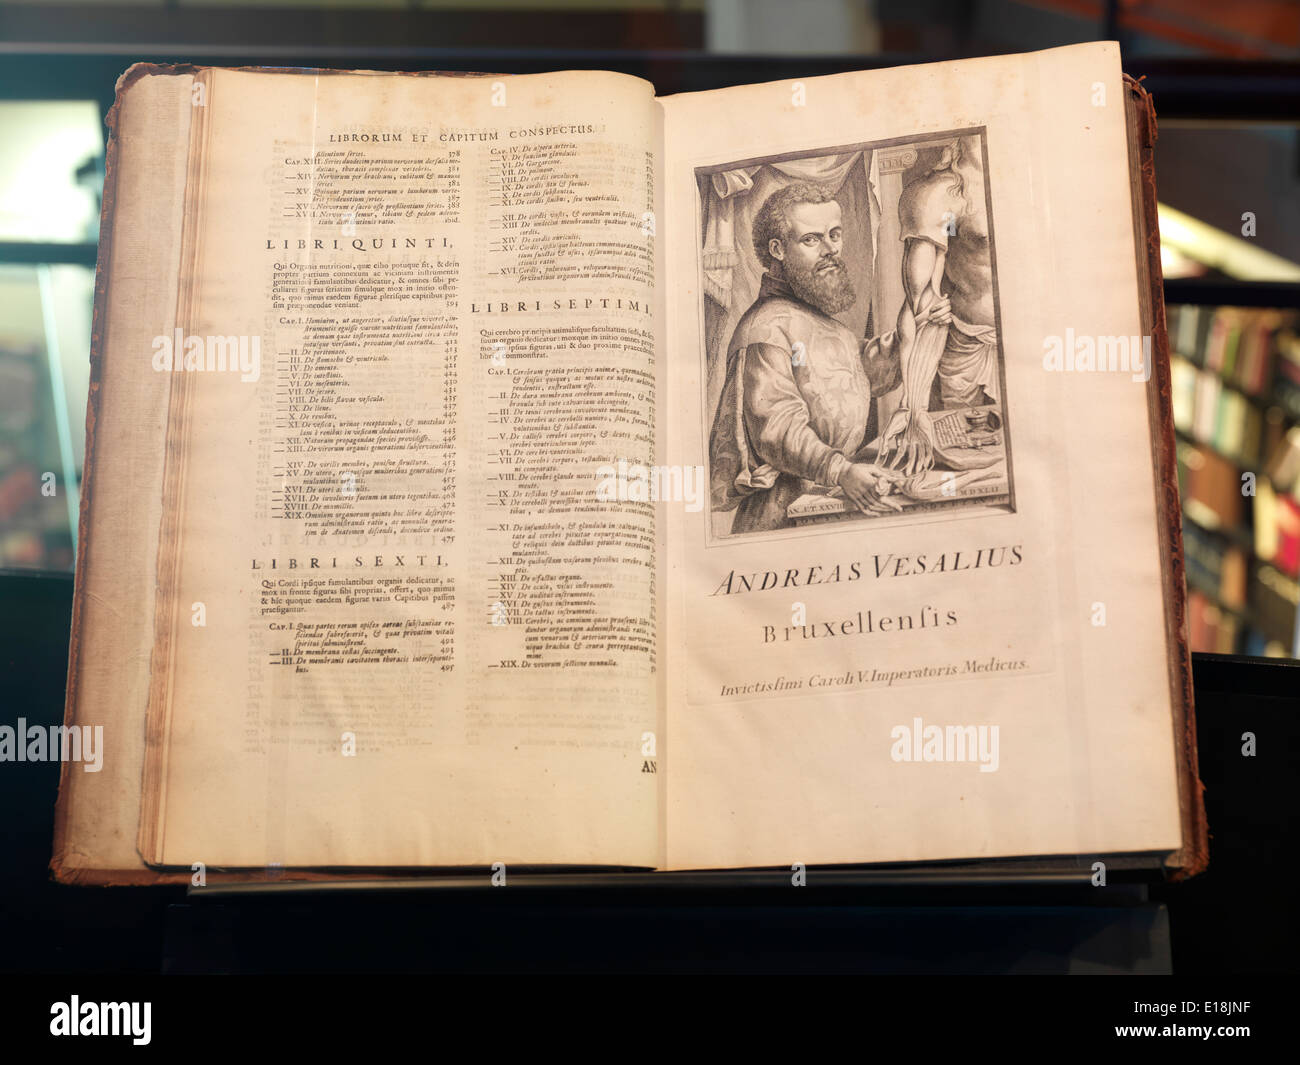 Andreas Vesalius, De Humani Corporis Fabrica Libri Septem anatomy book Stock Photo